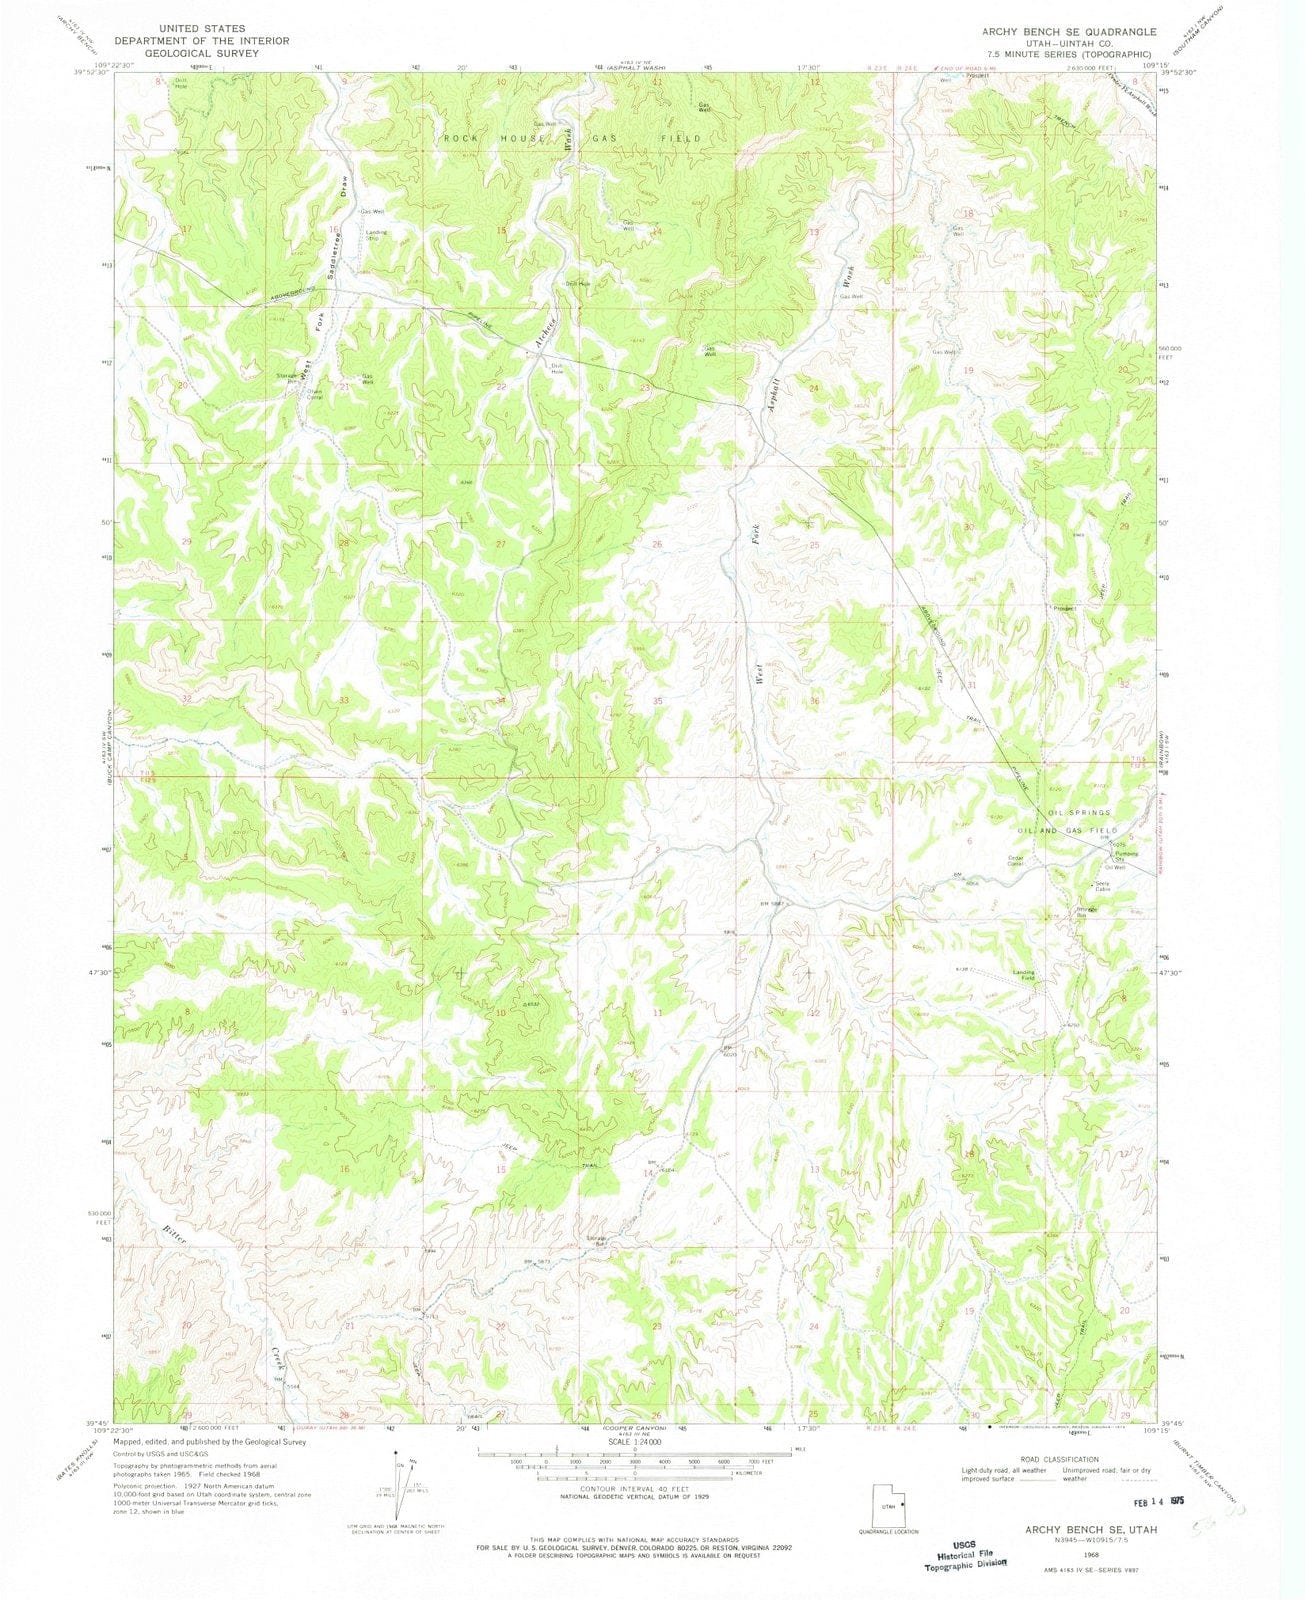 1968 Archy Bench, UT - Utah - USGS Topographic Map